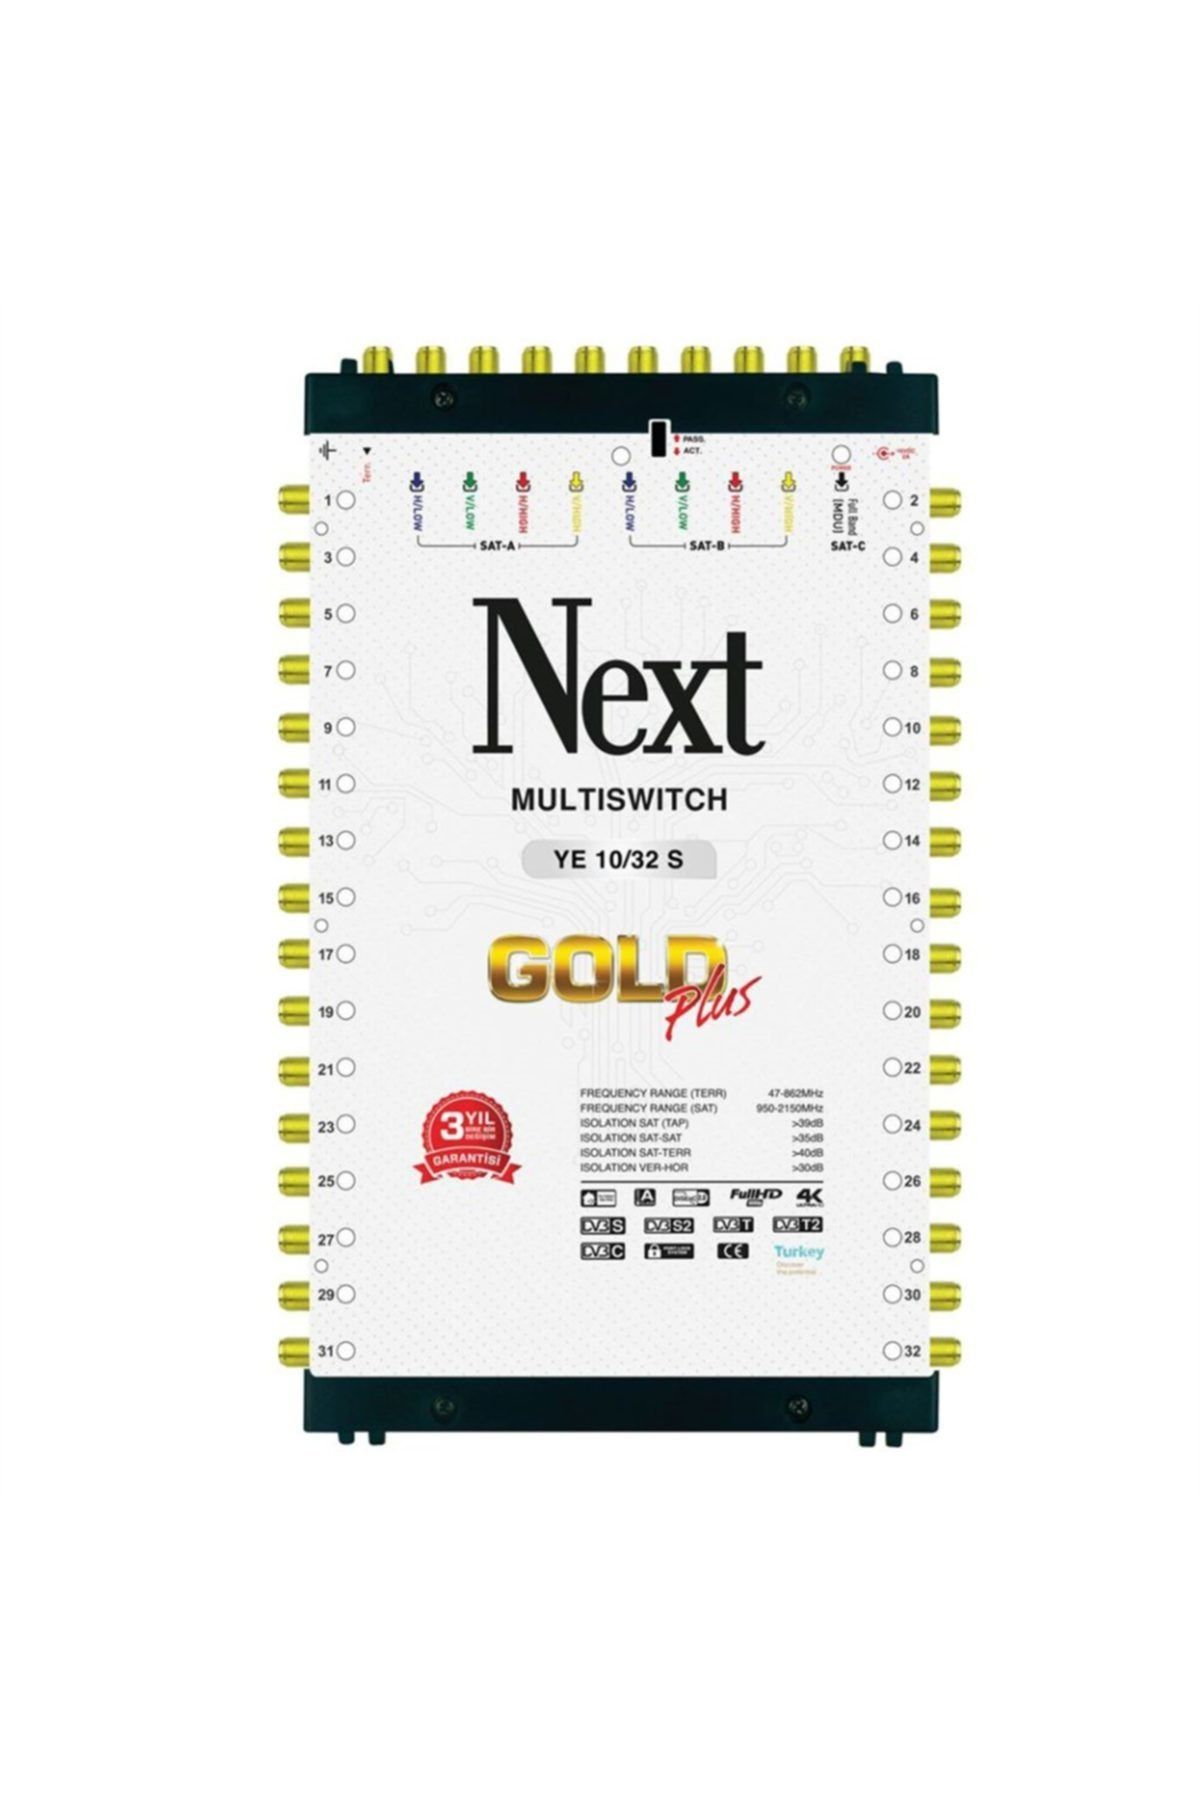 Next Nextstar Next 10/32 Kaskatlı Gold Plus Multiswitch Uydu Santrali